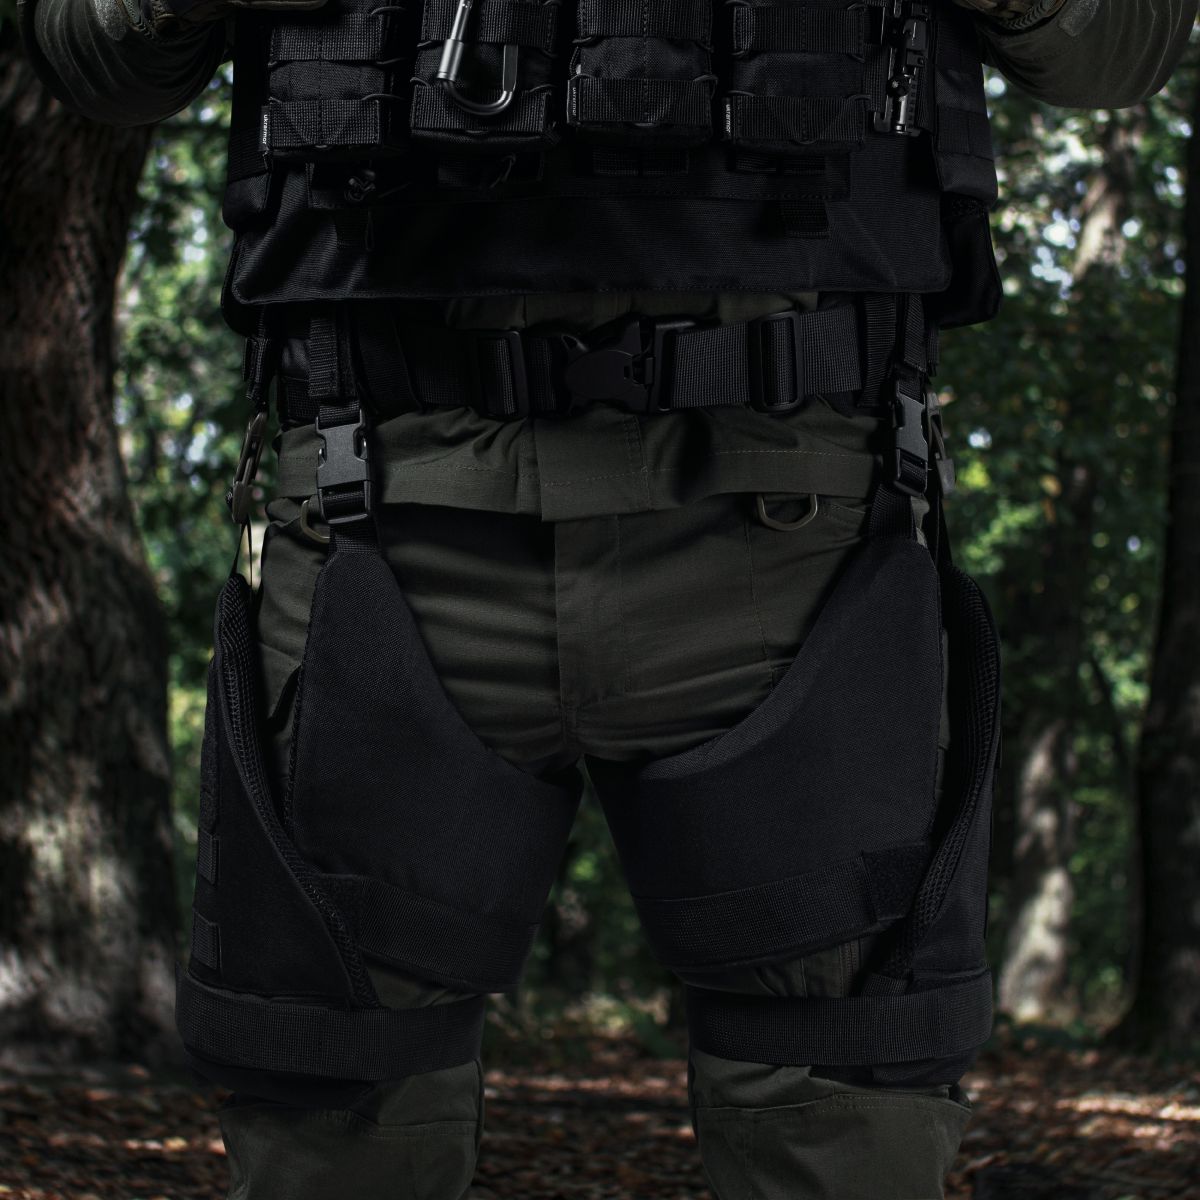 Бронекостюм A.T.A.S. (Advanced Tactical Armor Suit) Level I. Клас захисту – 1. Чорний. L/XL 9